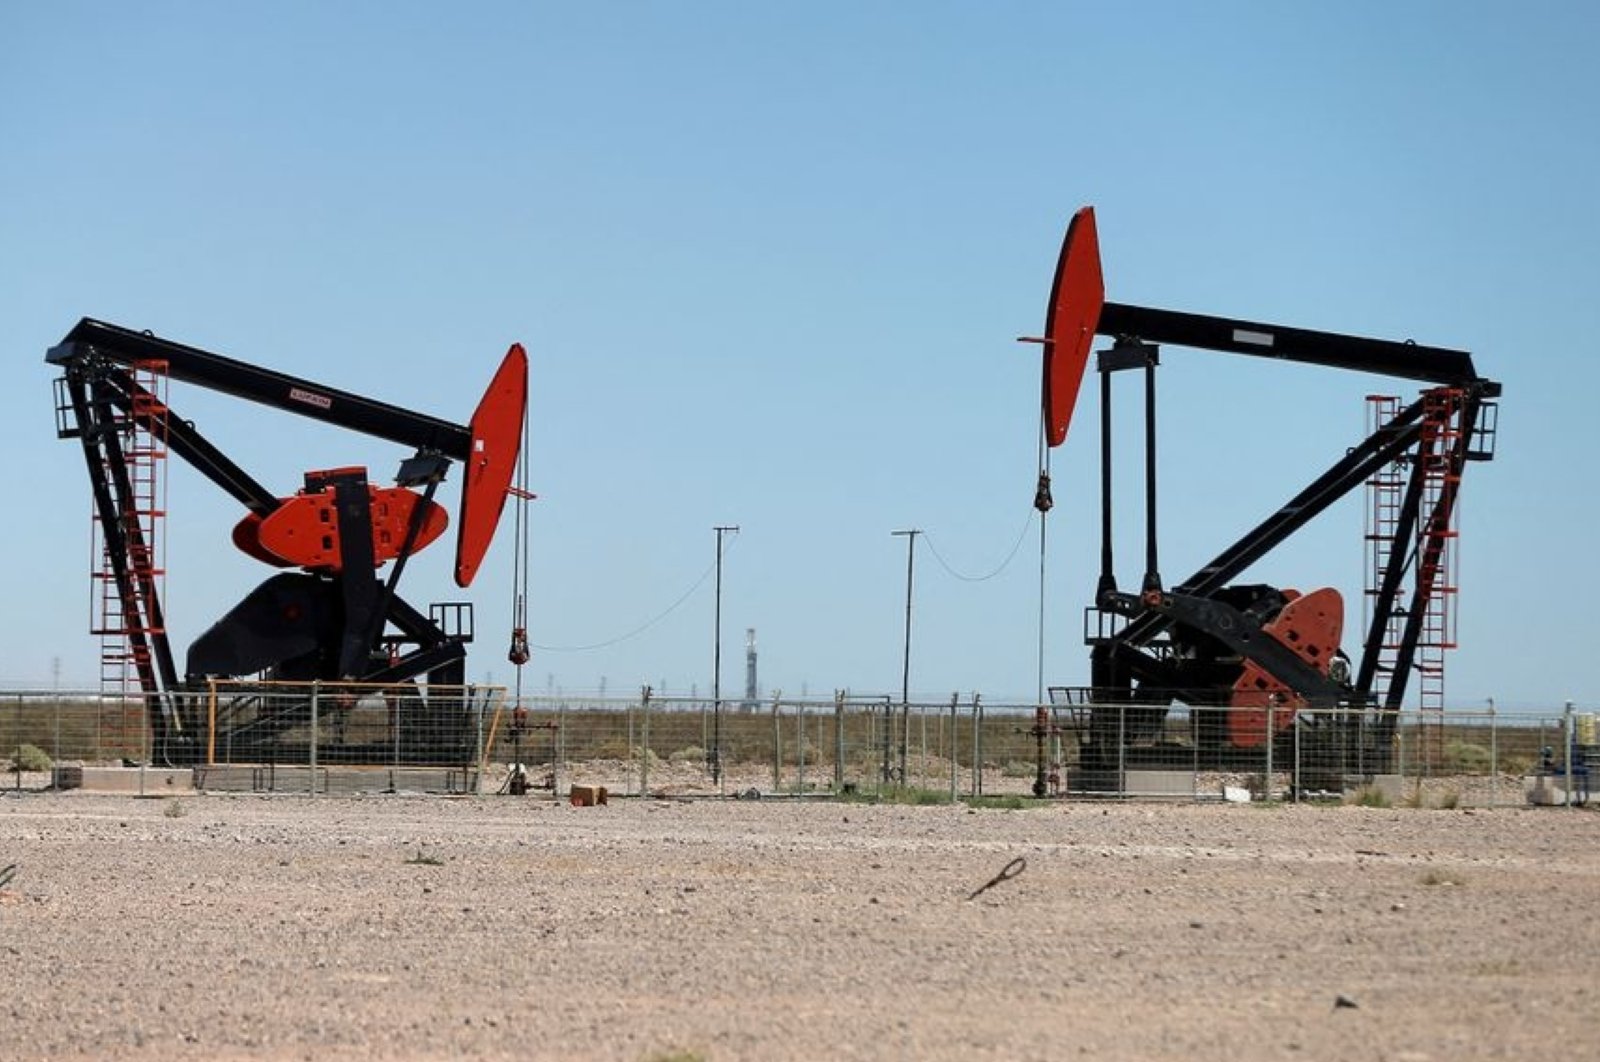 Harga minyak mencapai tertinggi sejak 2014 di tengah pasokan yang ketat, kerusuhan